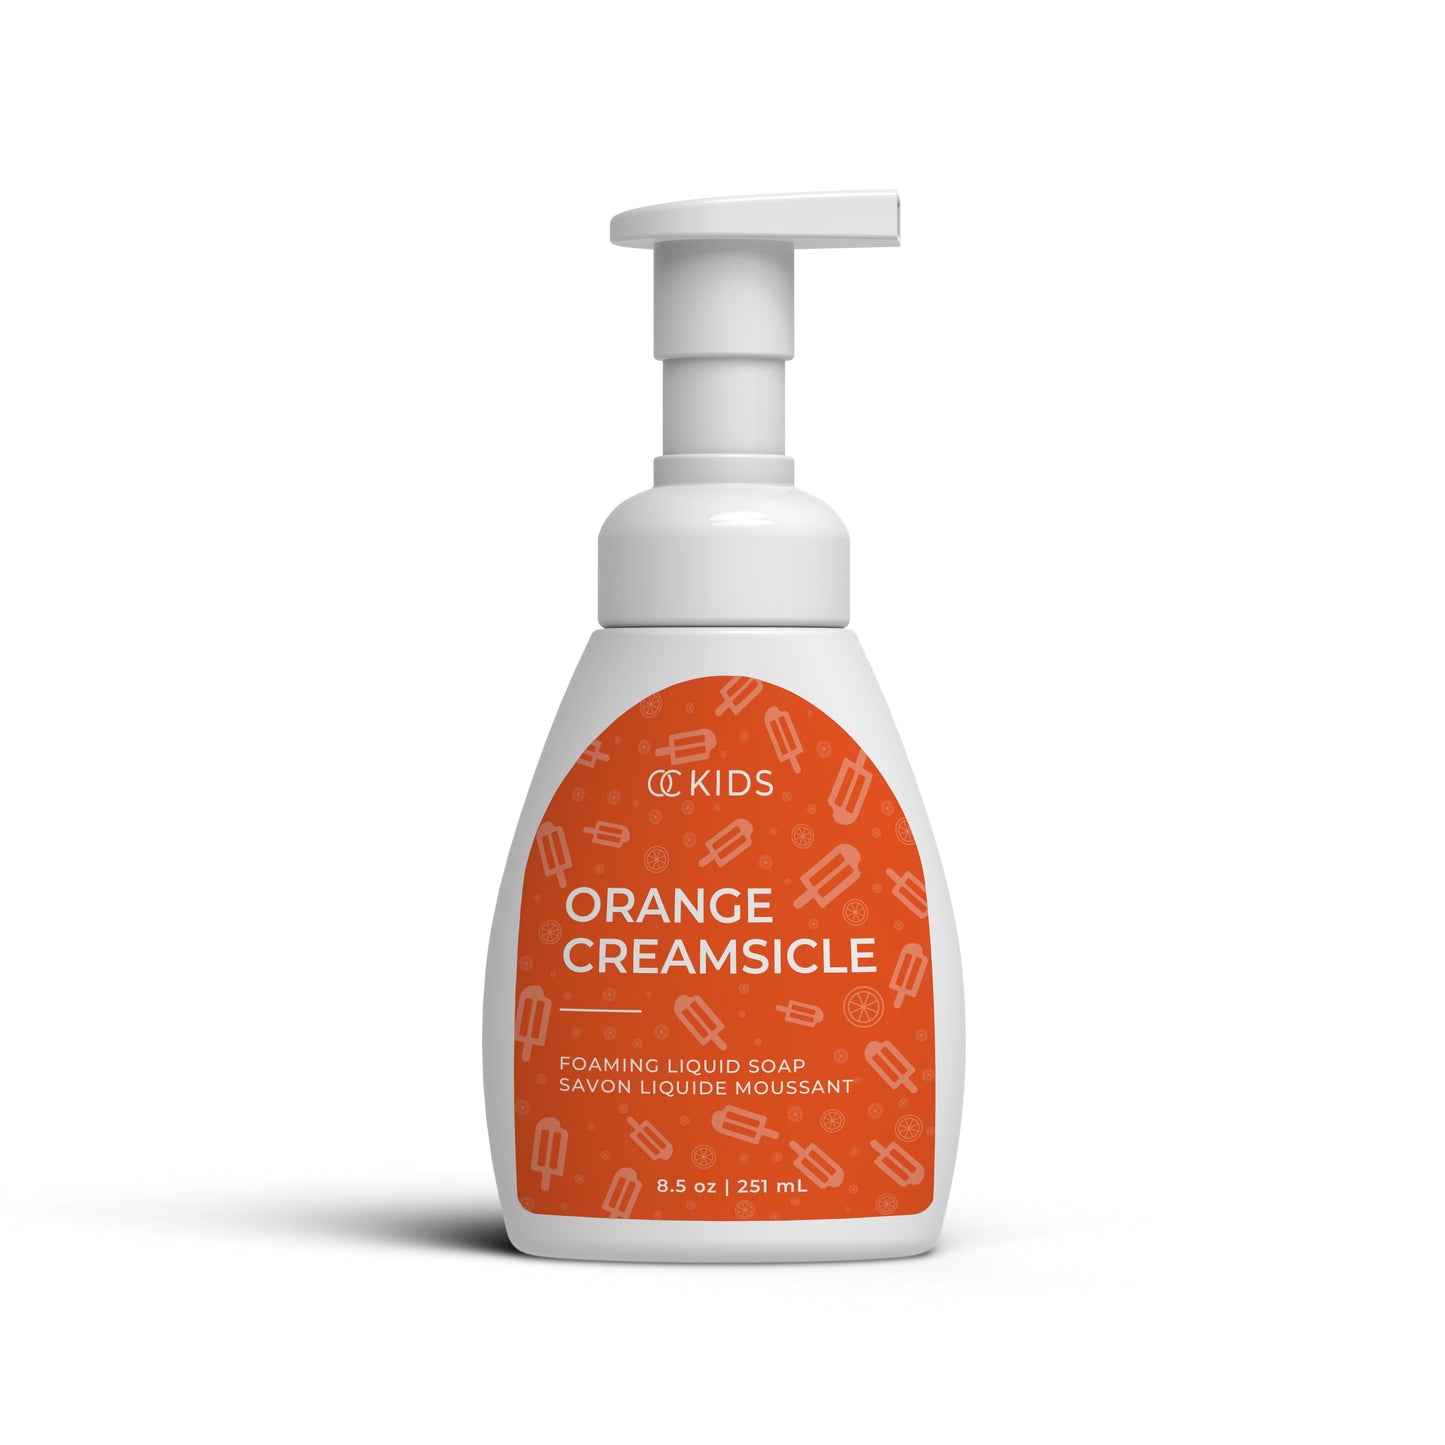 Orange Creamsicle Foaming Liquid Soap